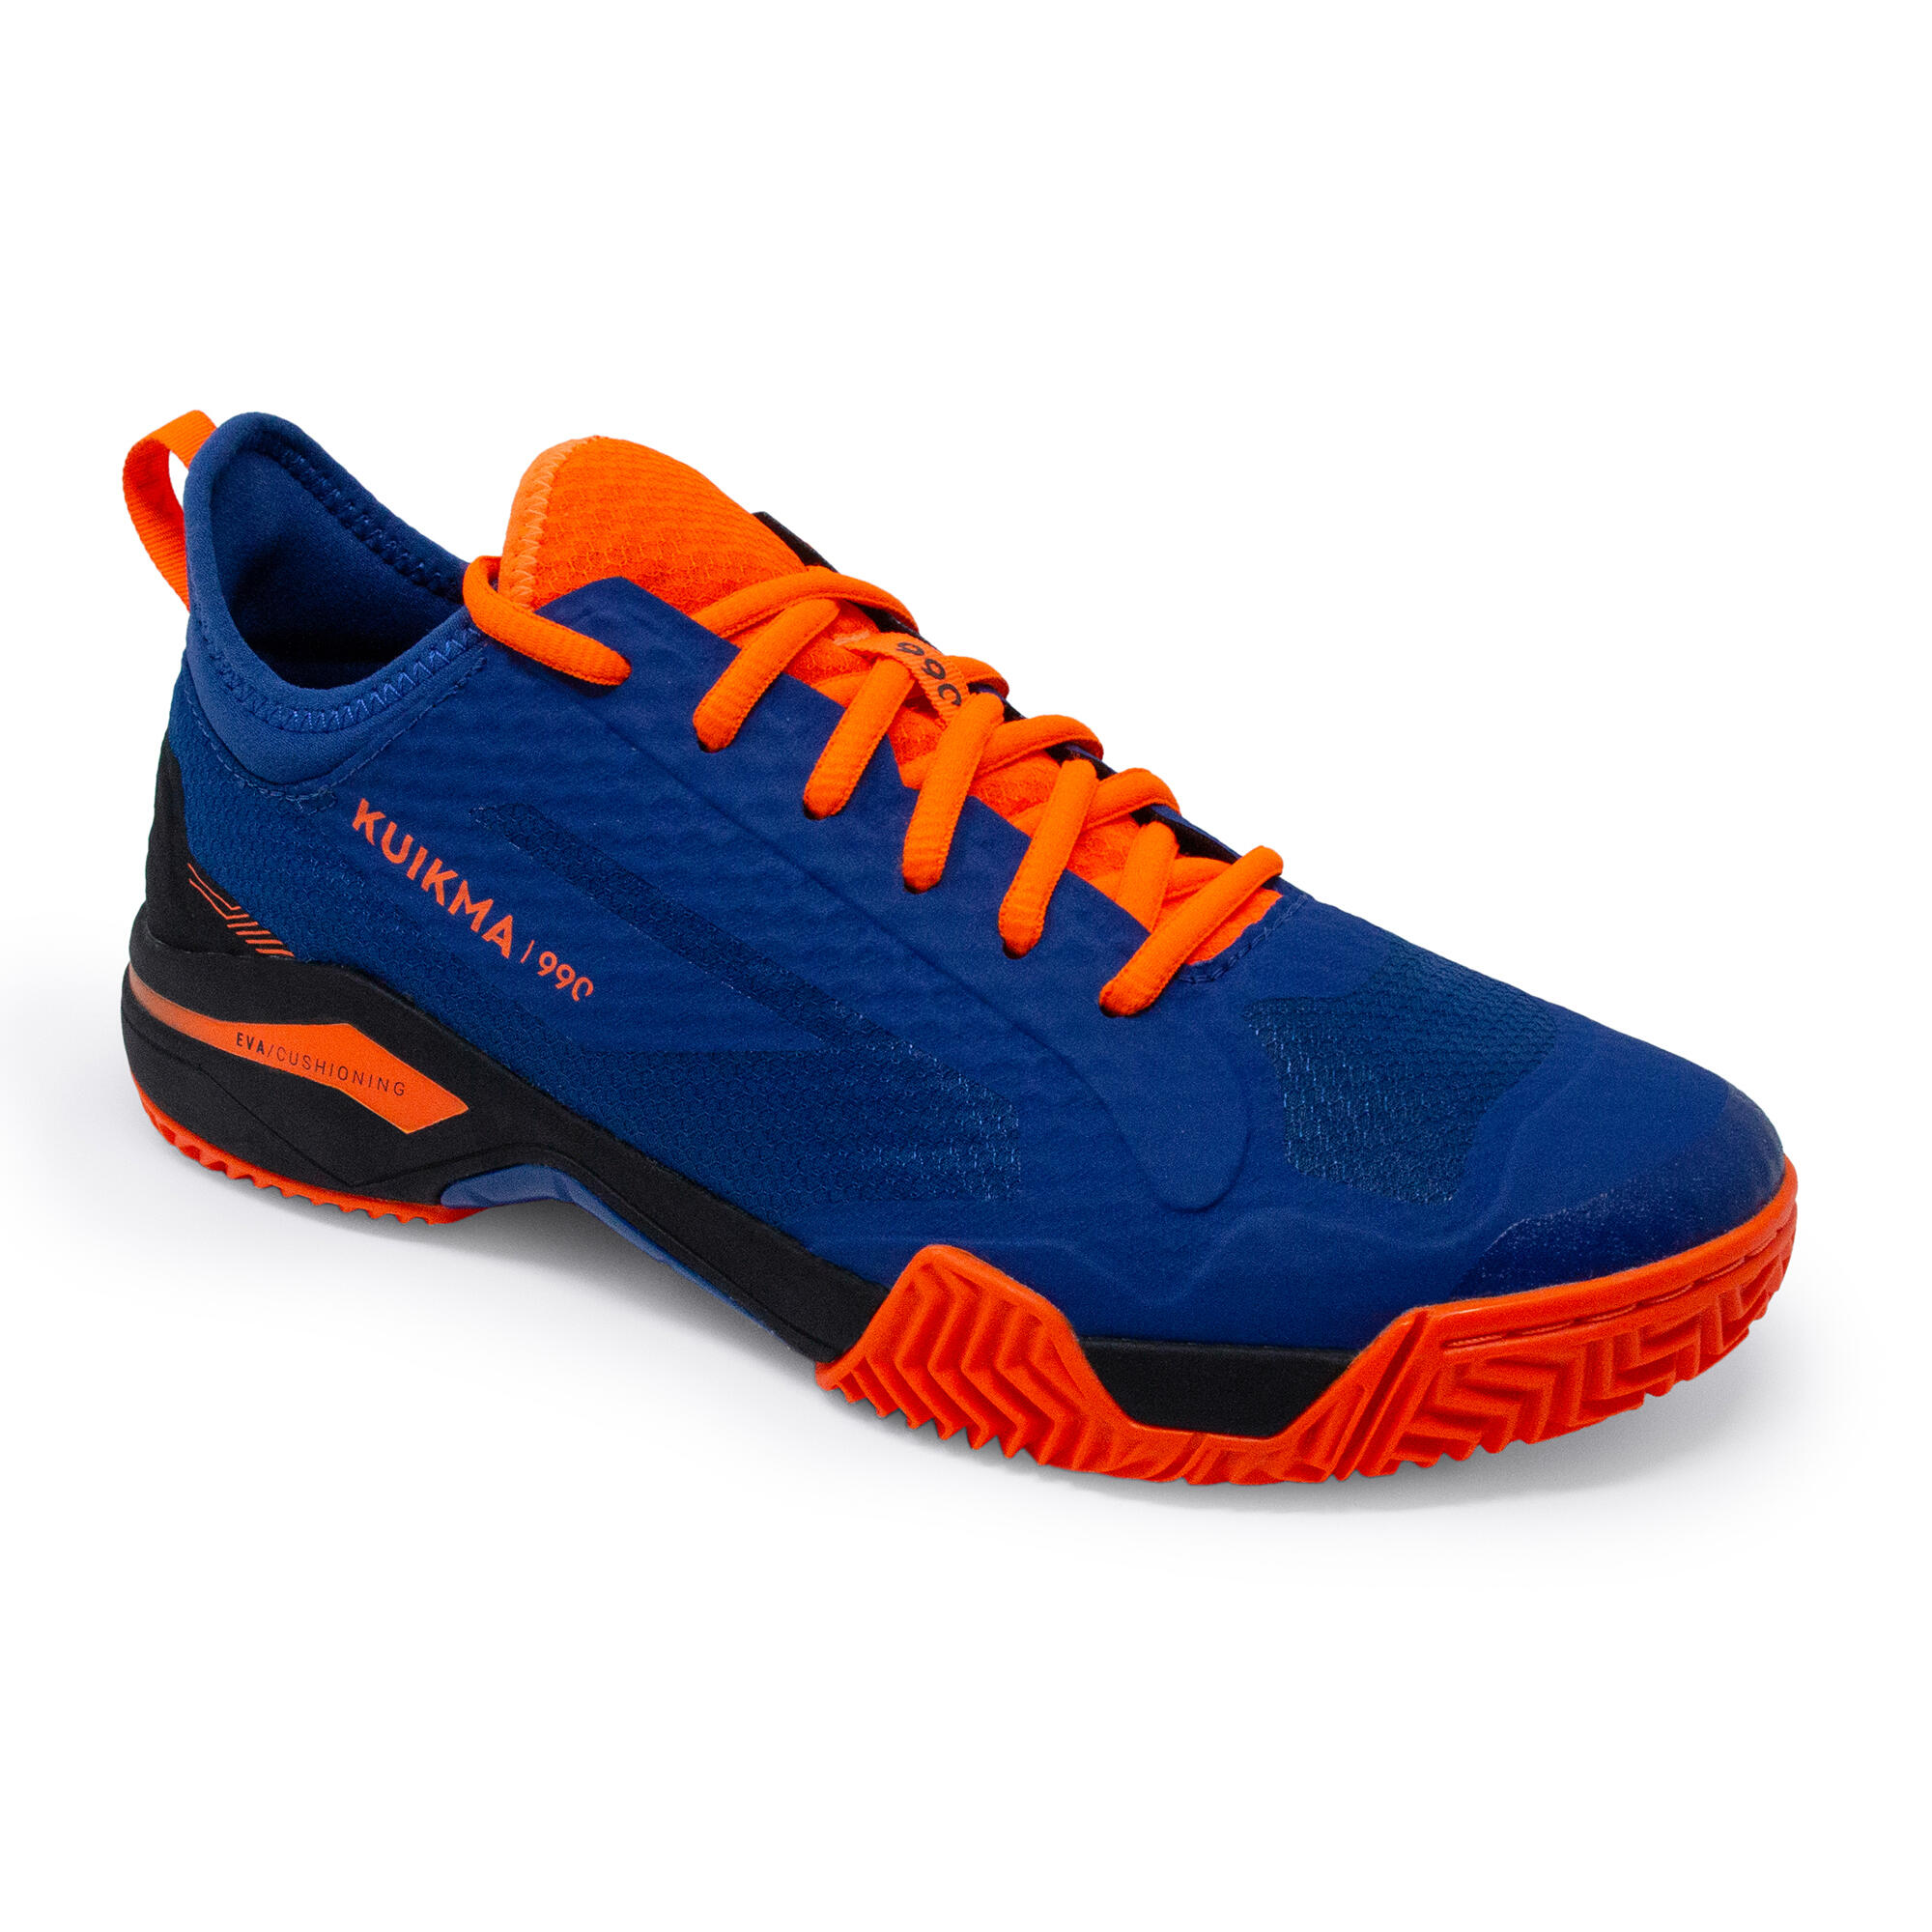 kuikma decathlon - scarpe padel uomo ps 990 dynamic azzurro-arancione -